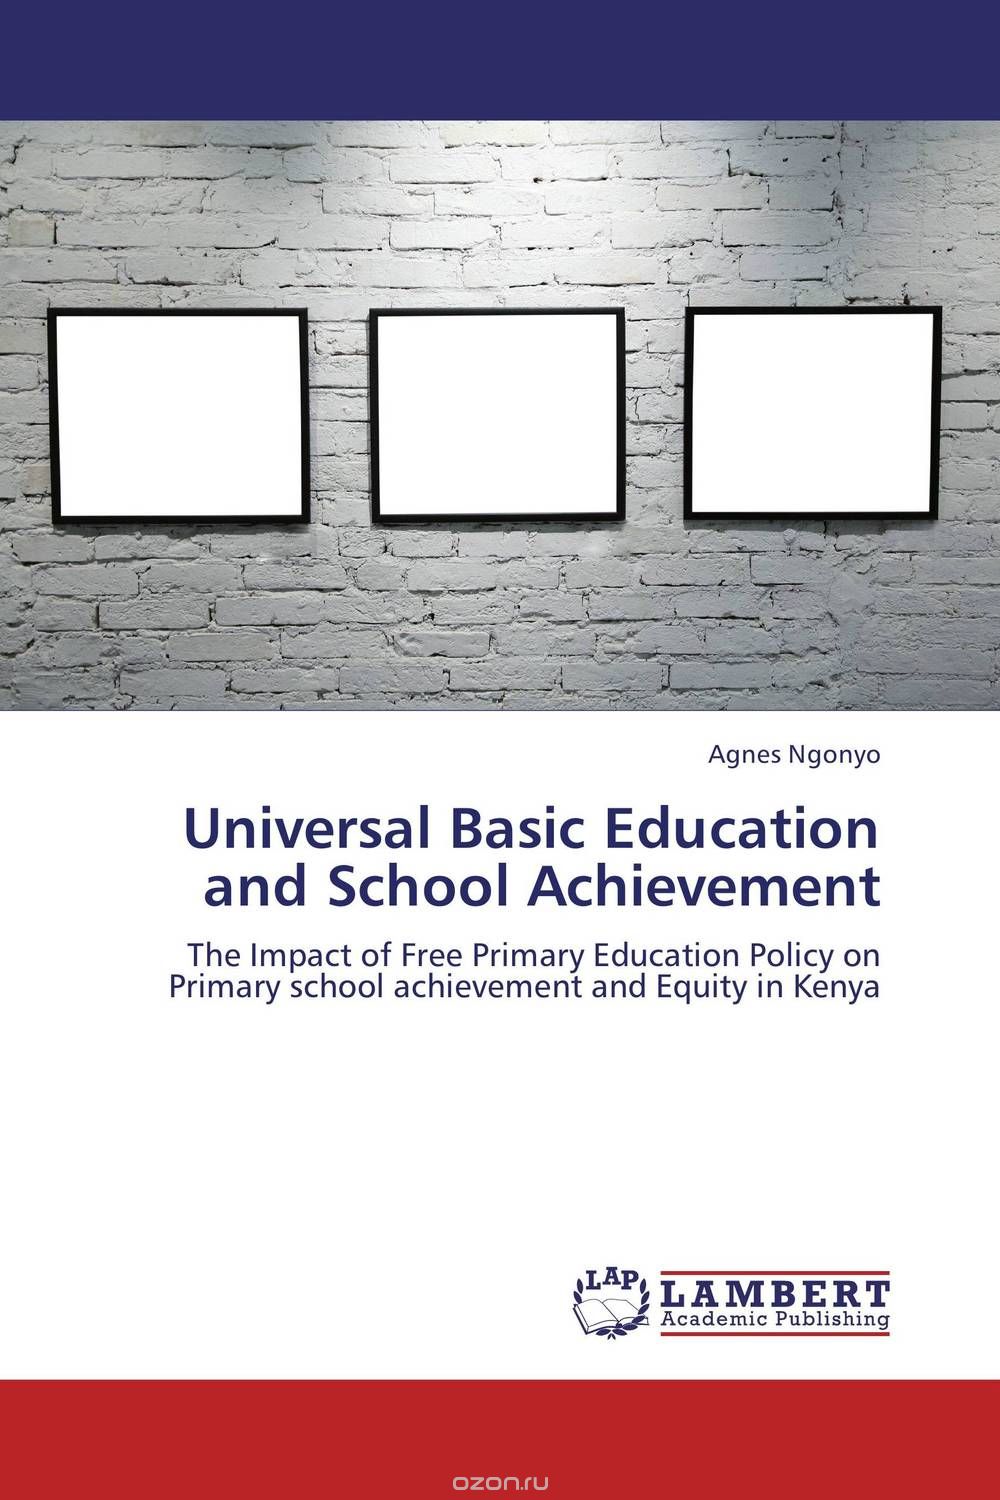 Скачать книгу "Universal Basic Education and School Achievement"